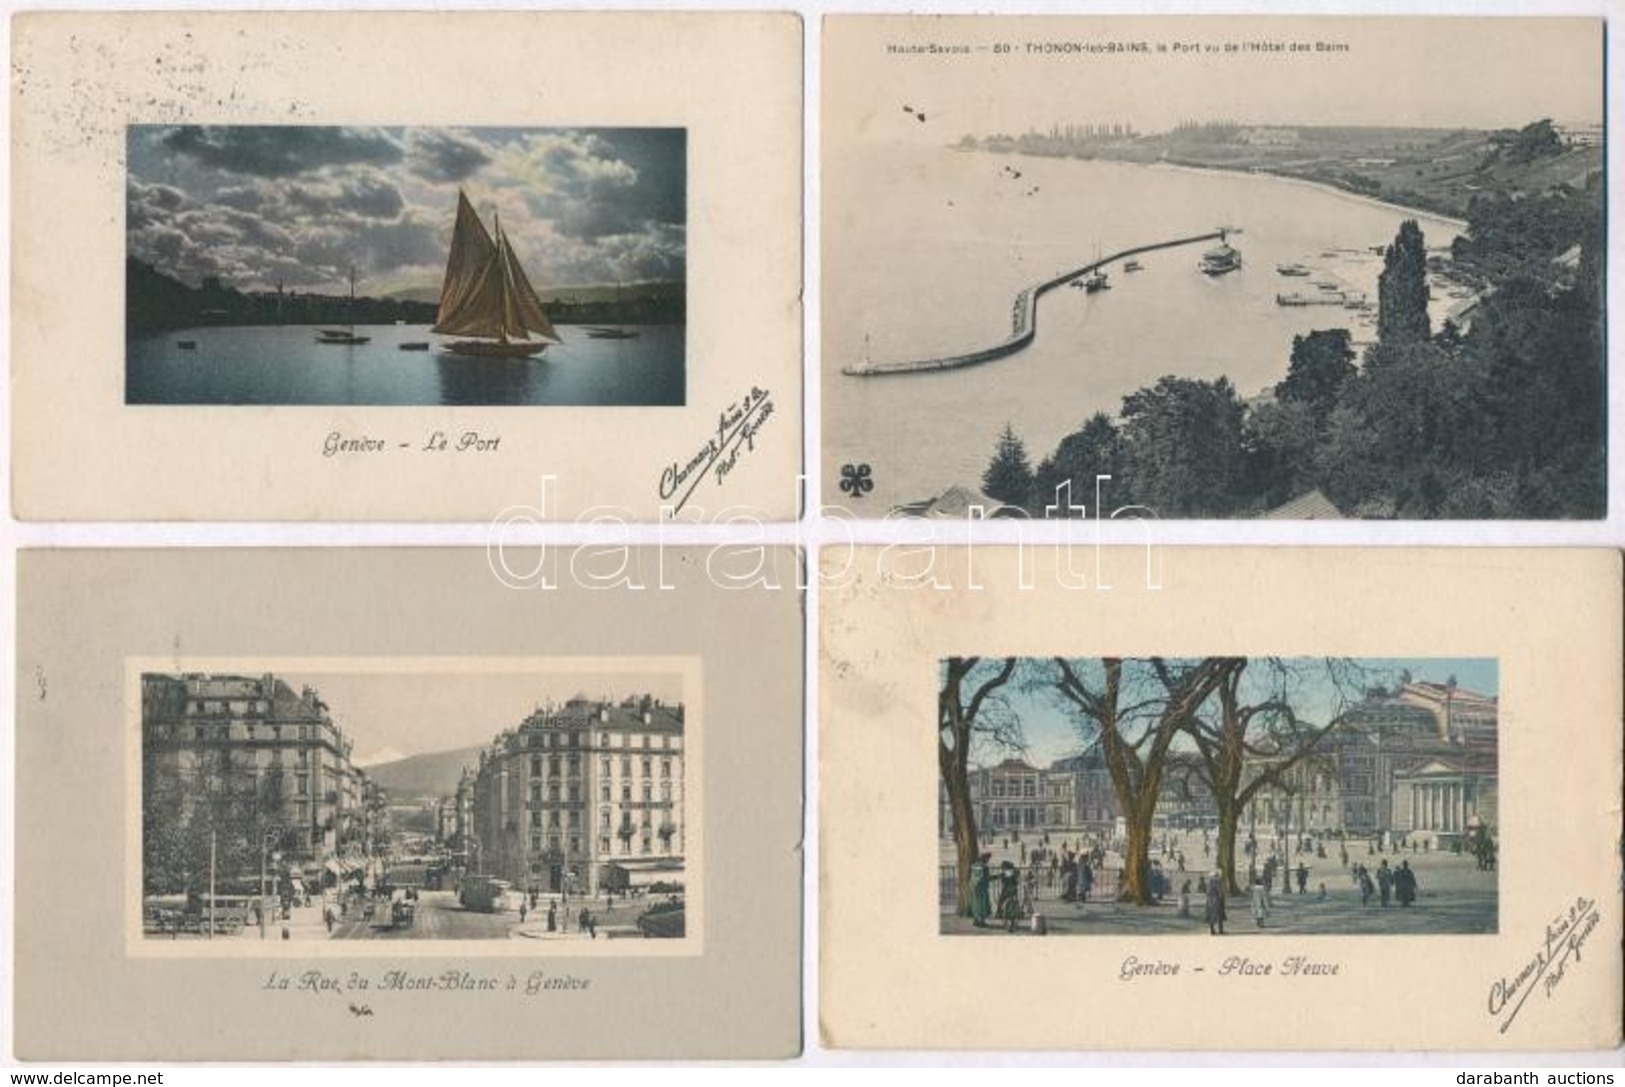 ** * 40 Db RÉGI Főleg Svájci Városképes Lap / 40 Pre-1945 Mostly Swiss Town-view Postcards - Zonder Classificatie